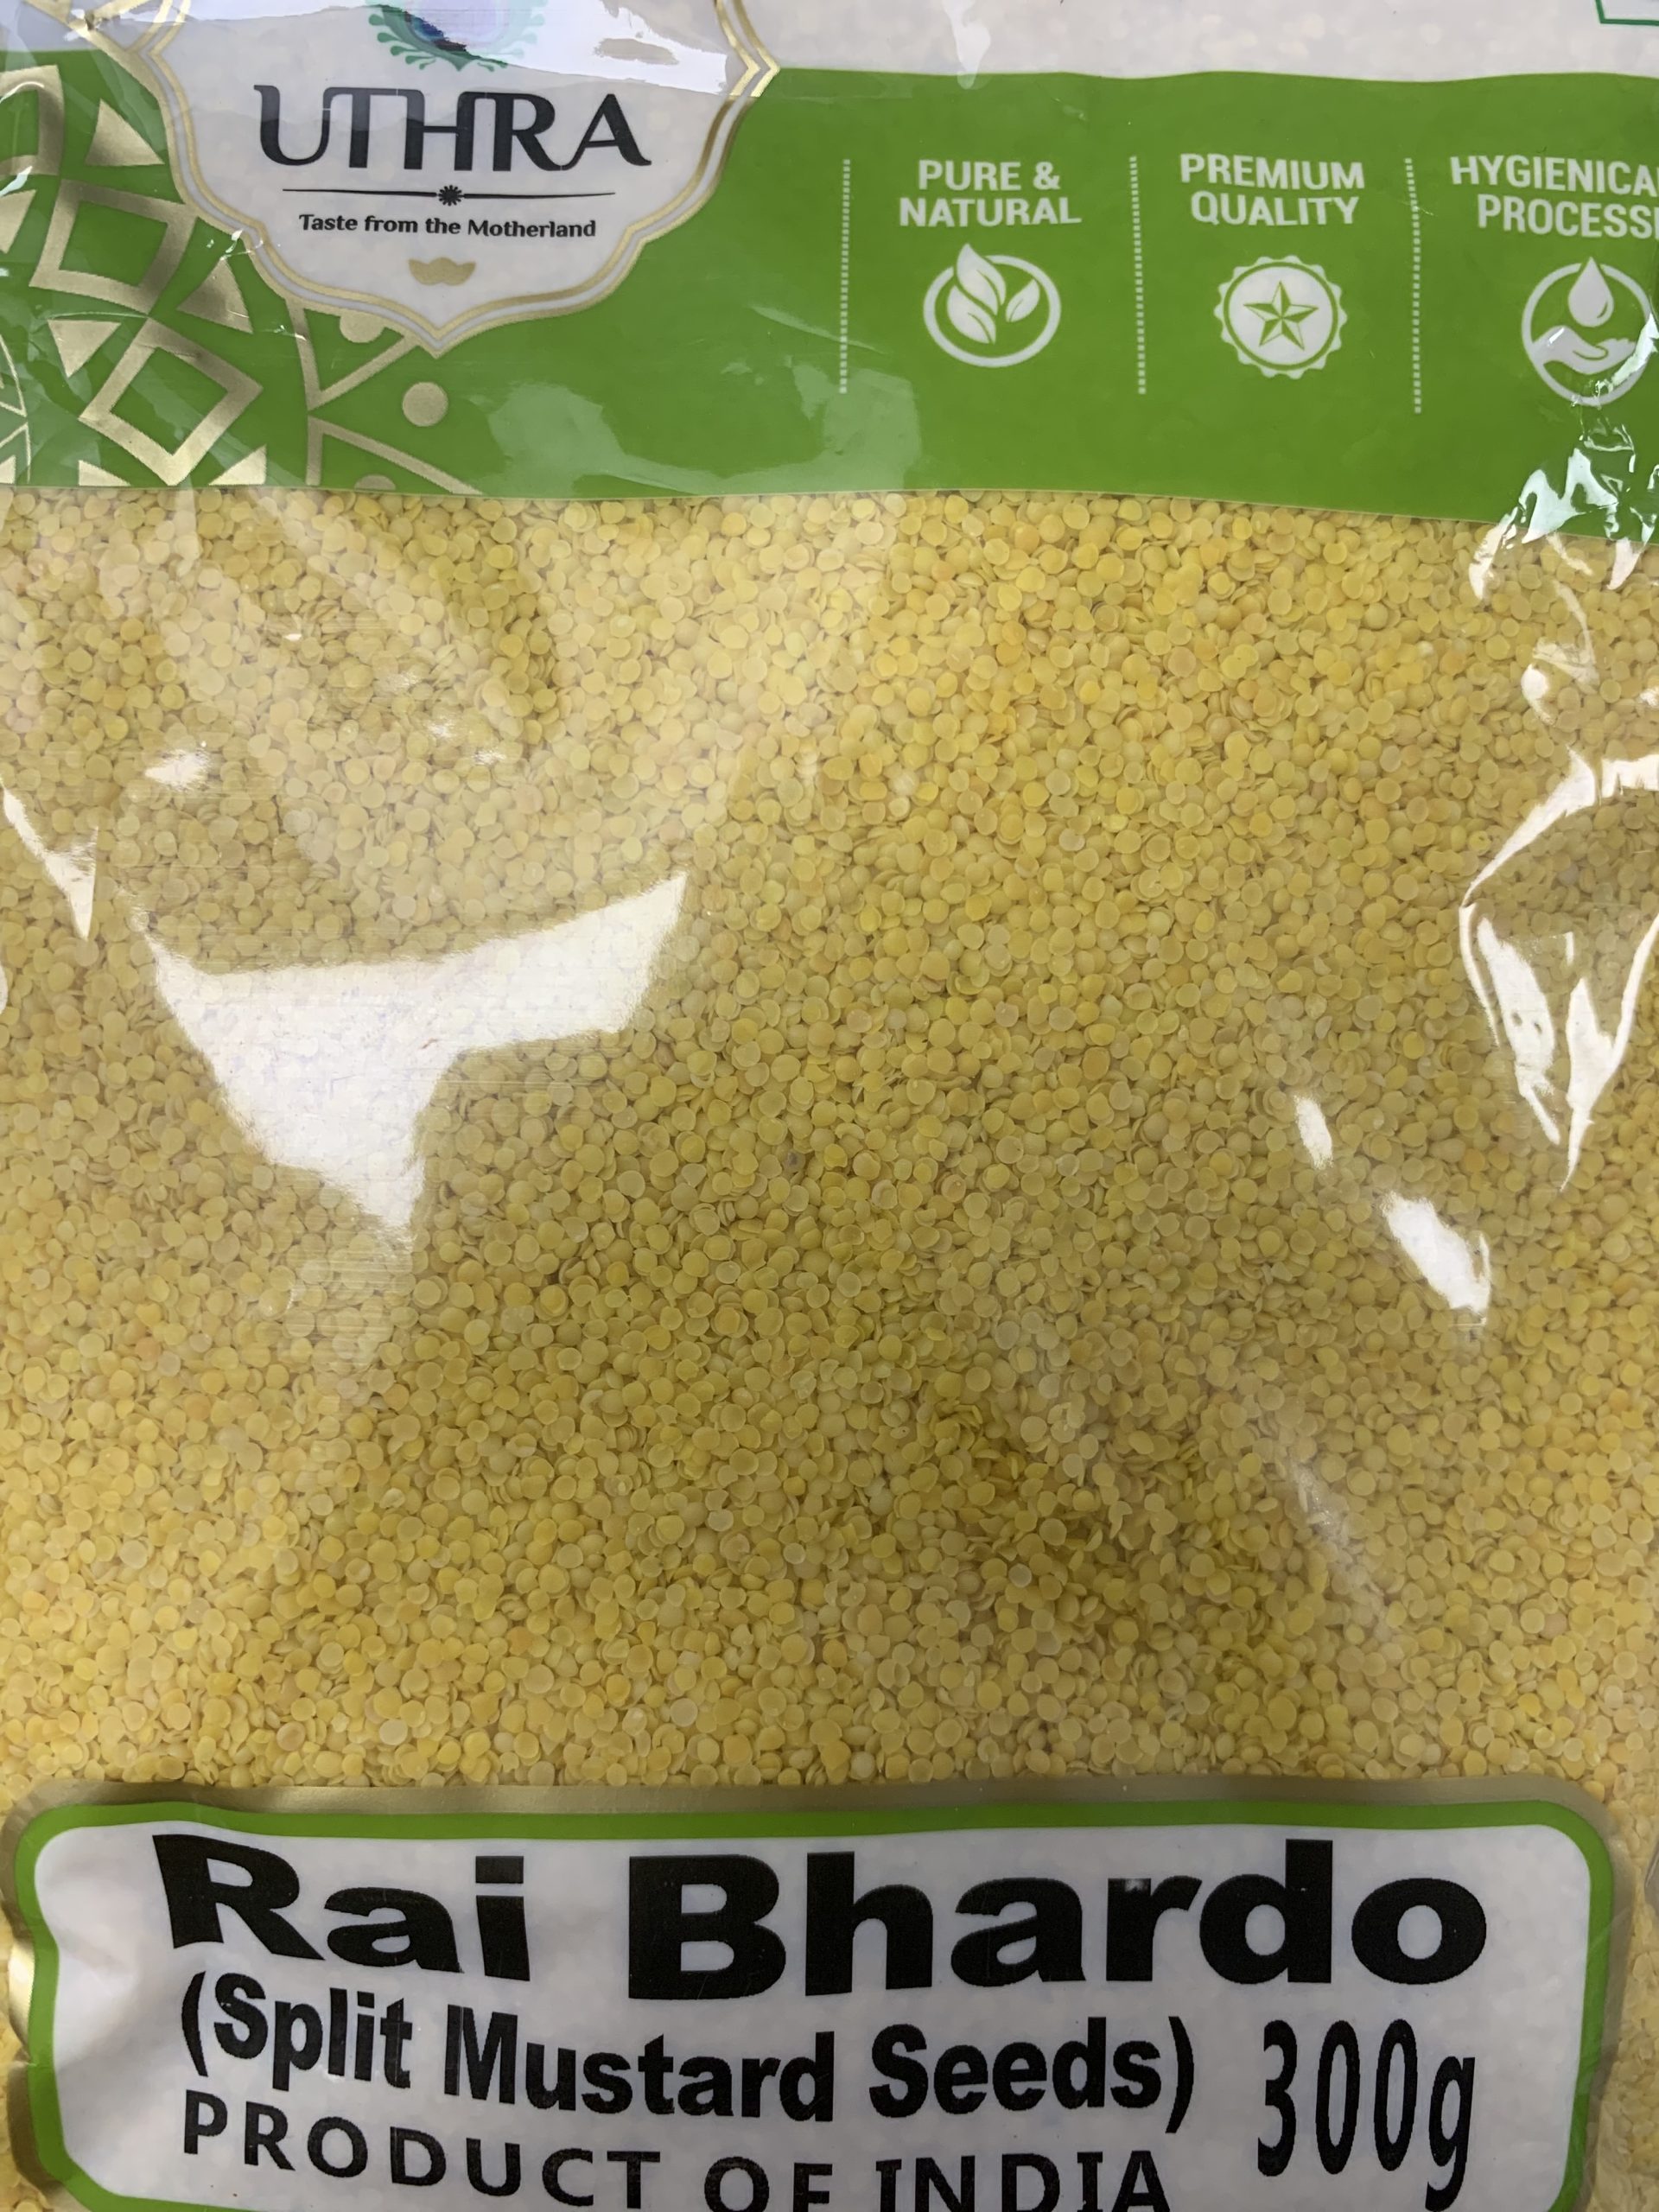 Uthra Rai Bhardo (split mustard seeds )300g